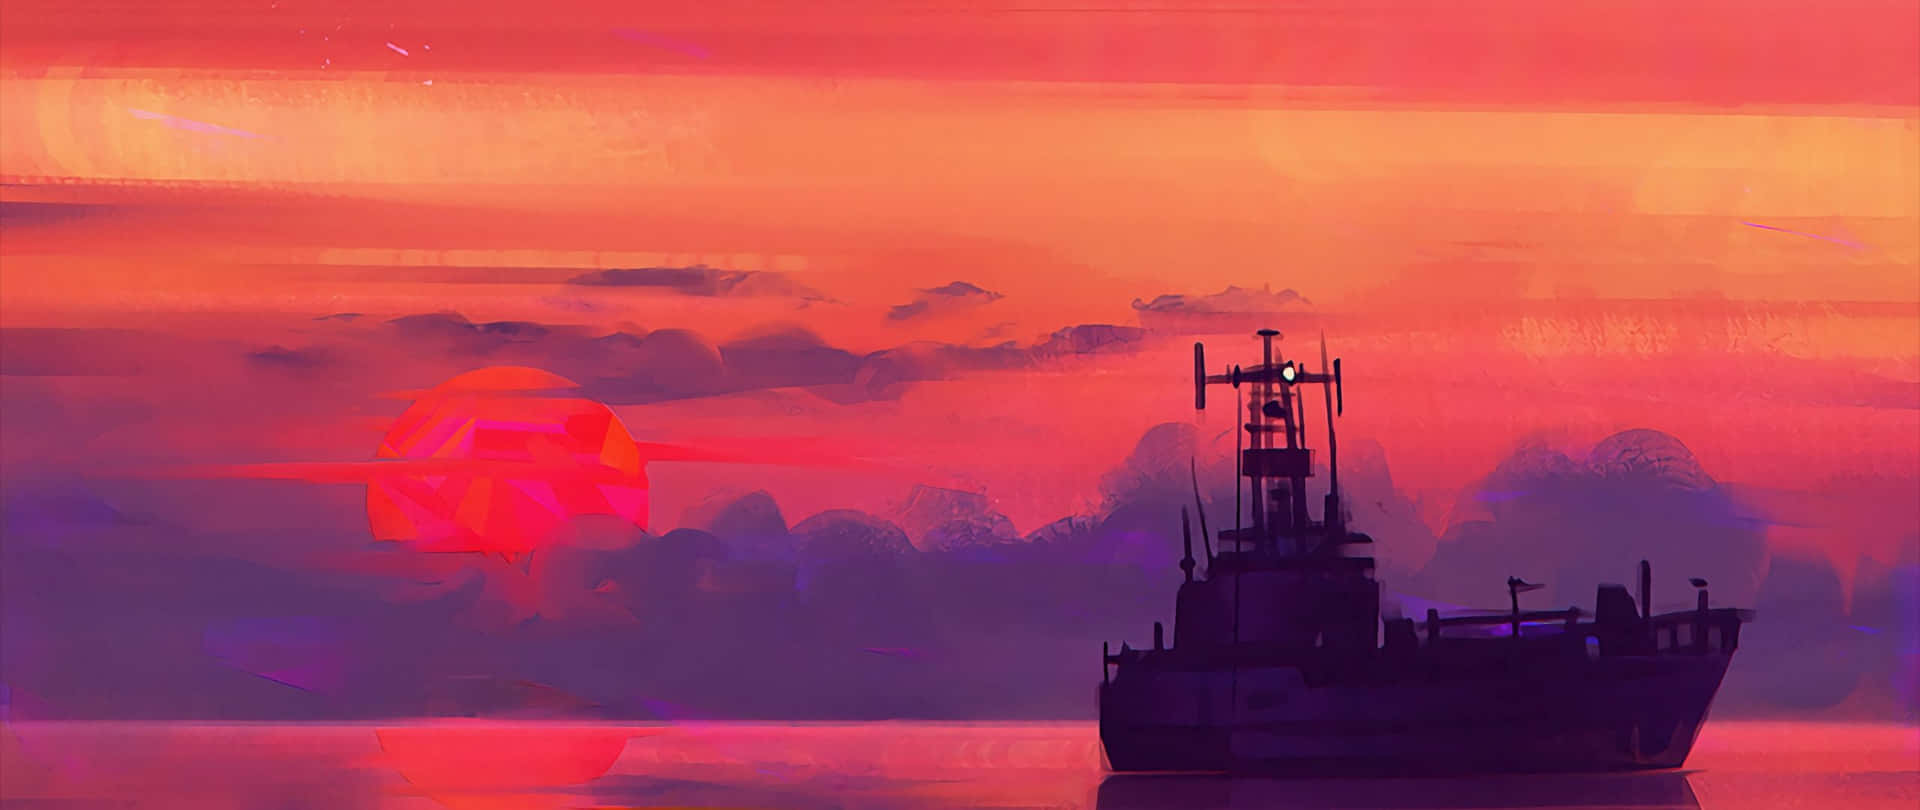 Boat During Sunset Art 2560x1080 Wallpaper